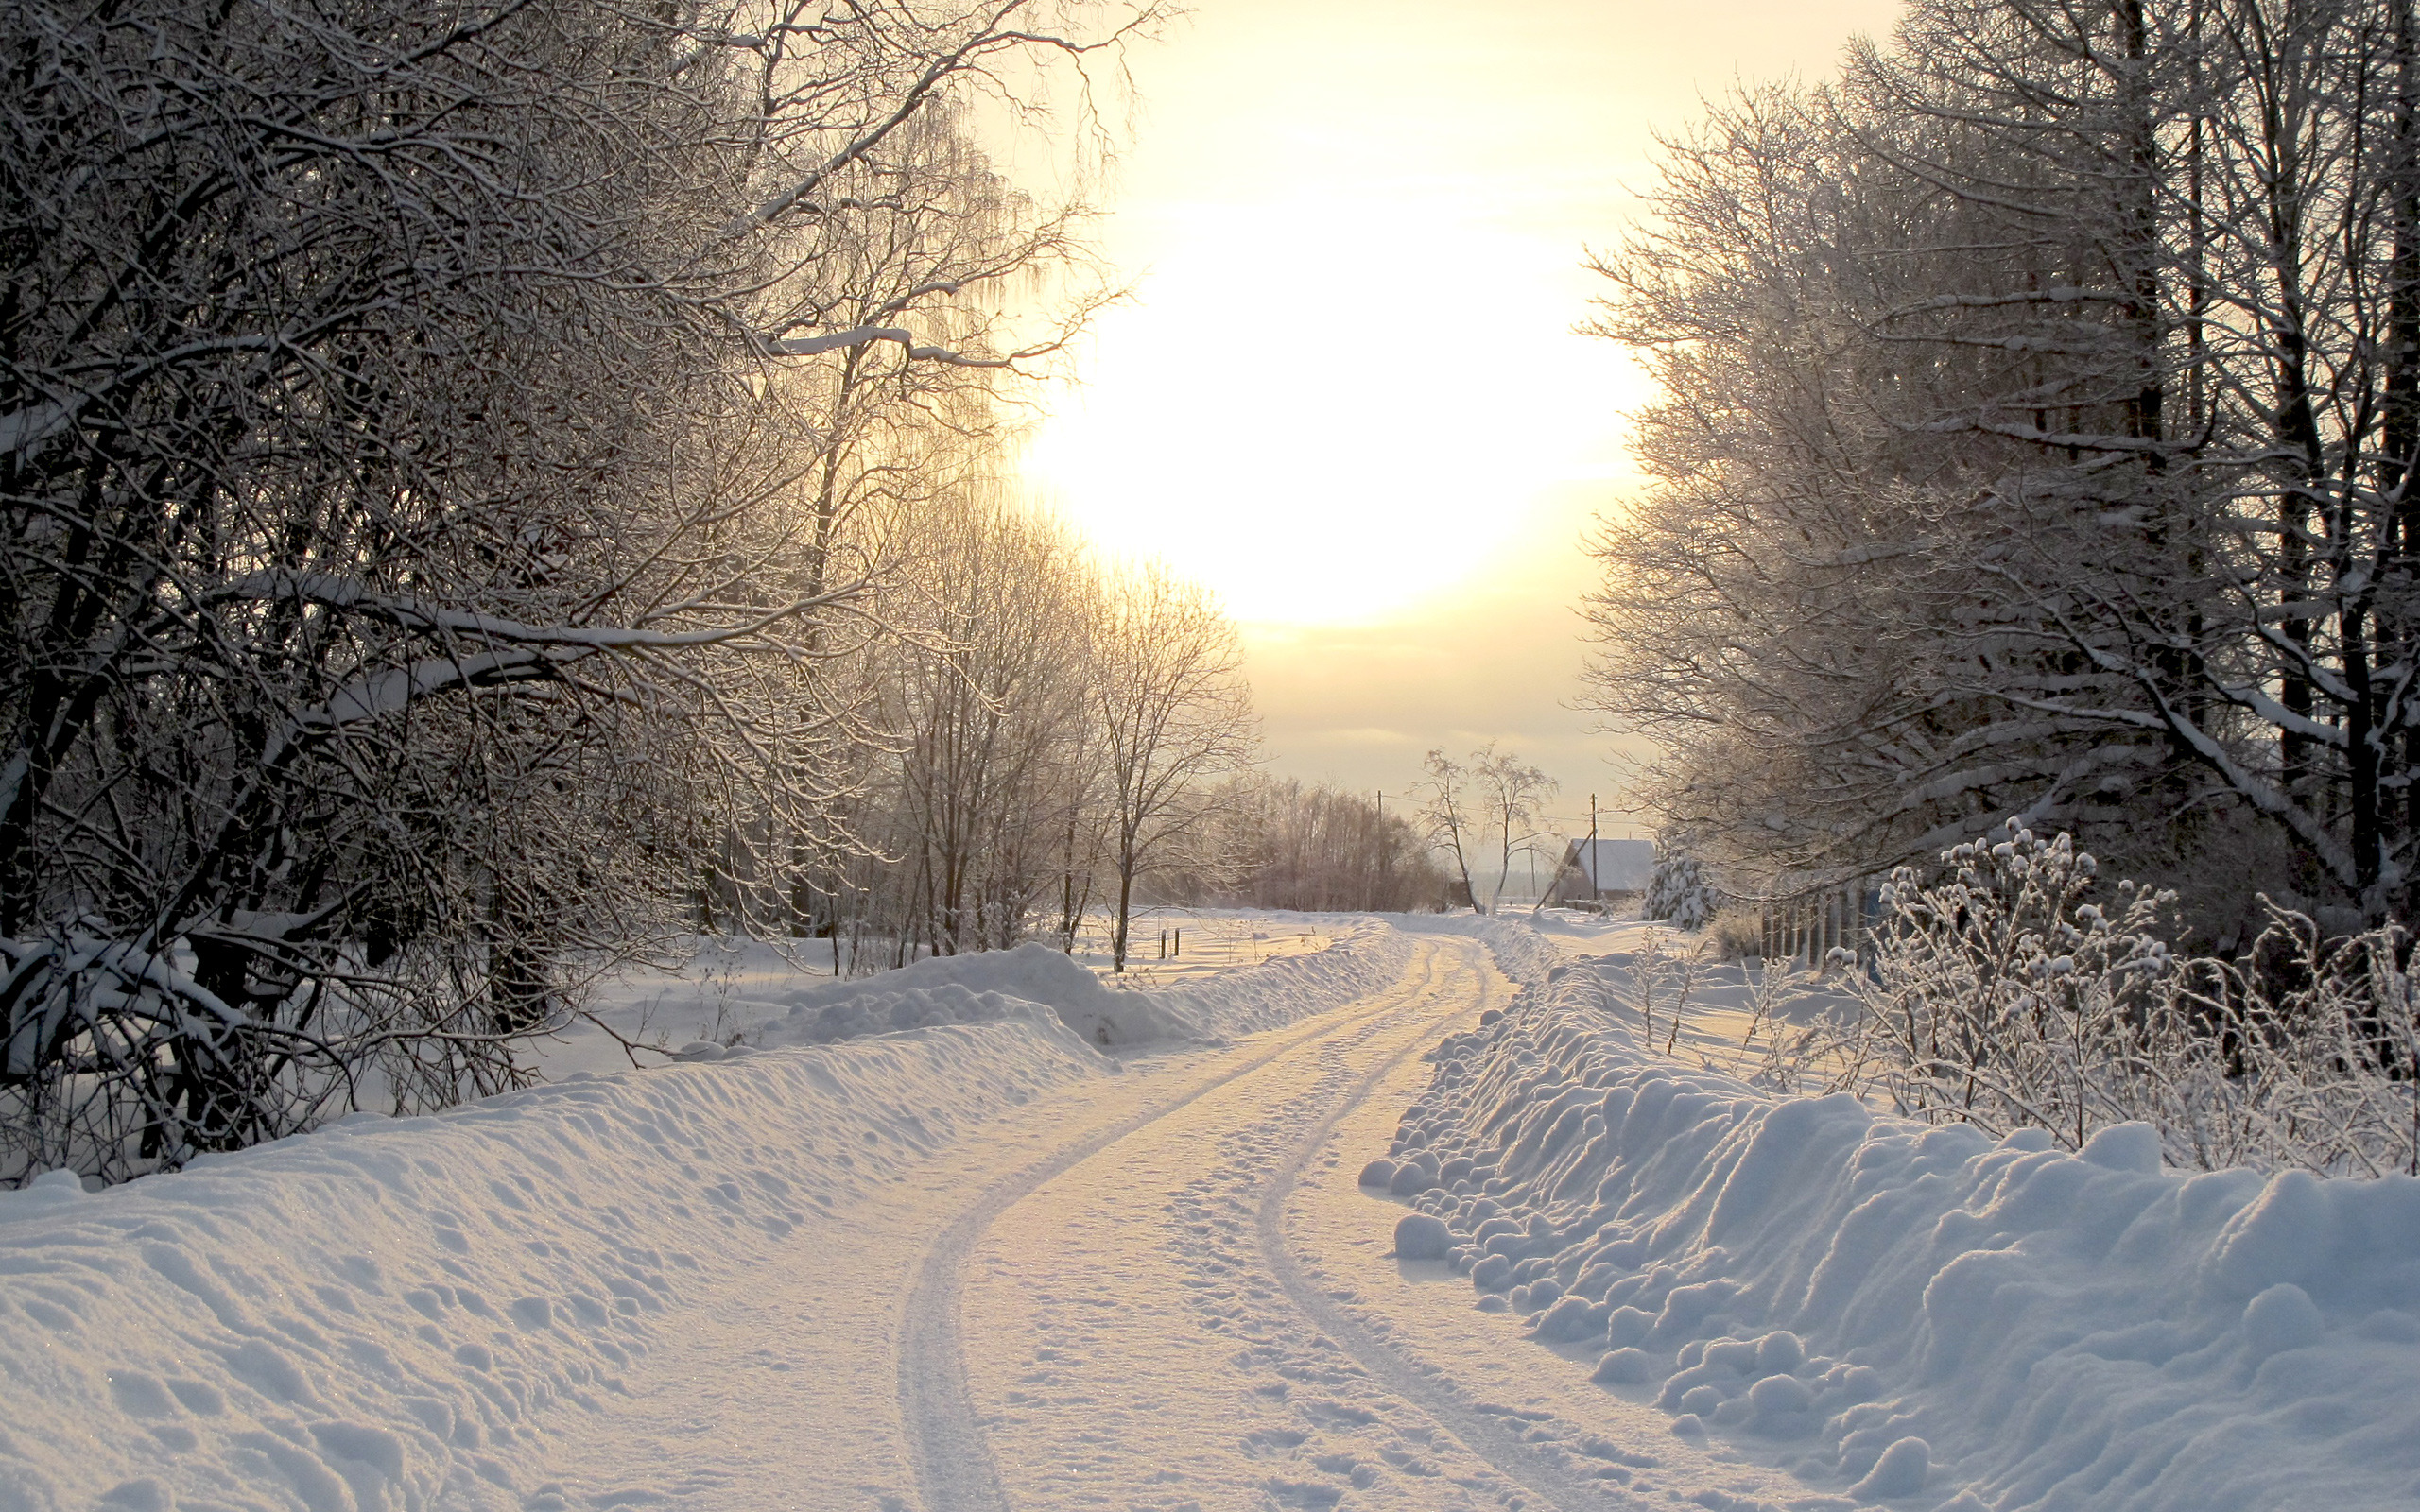 Январские сугробы. Зимняя дорога. Зима в деревне. Заснеженная дорога в лесу. Дорога зимой.